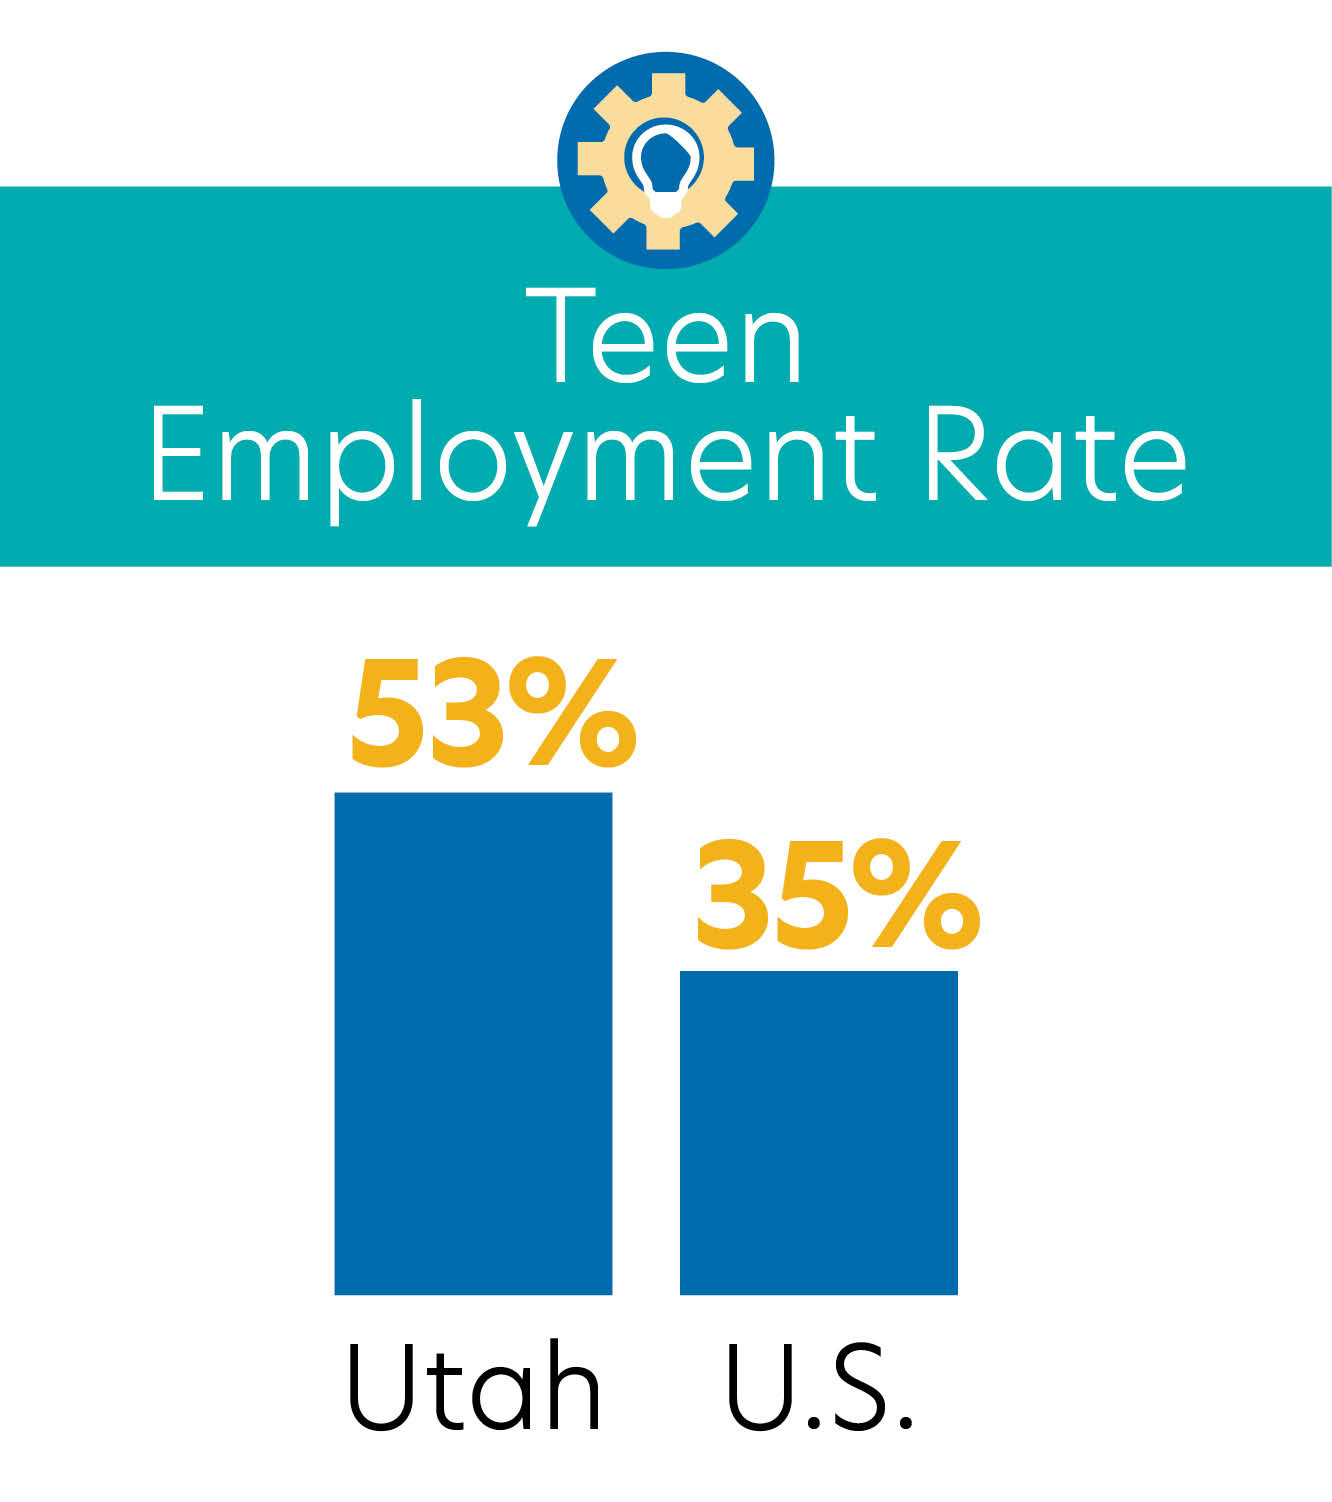 Teen Employment Rate: Utah, 53%, U.S. 35%